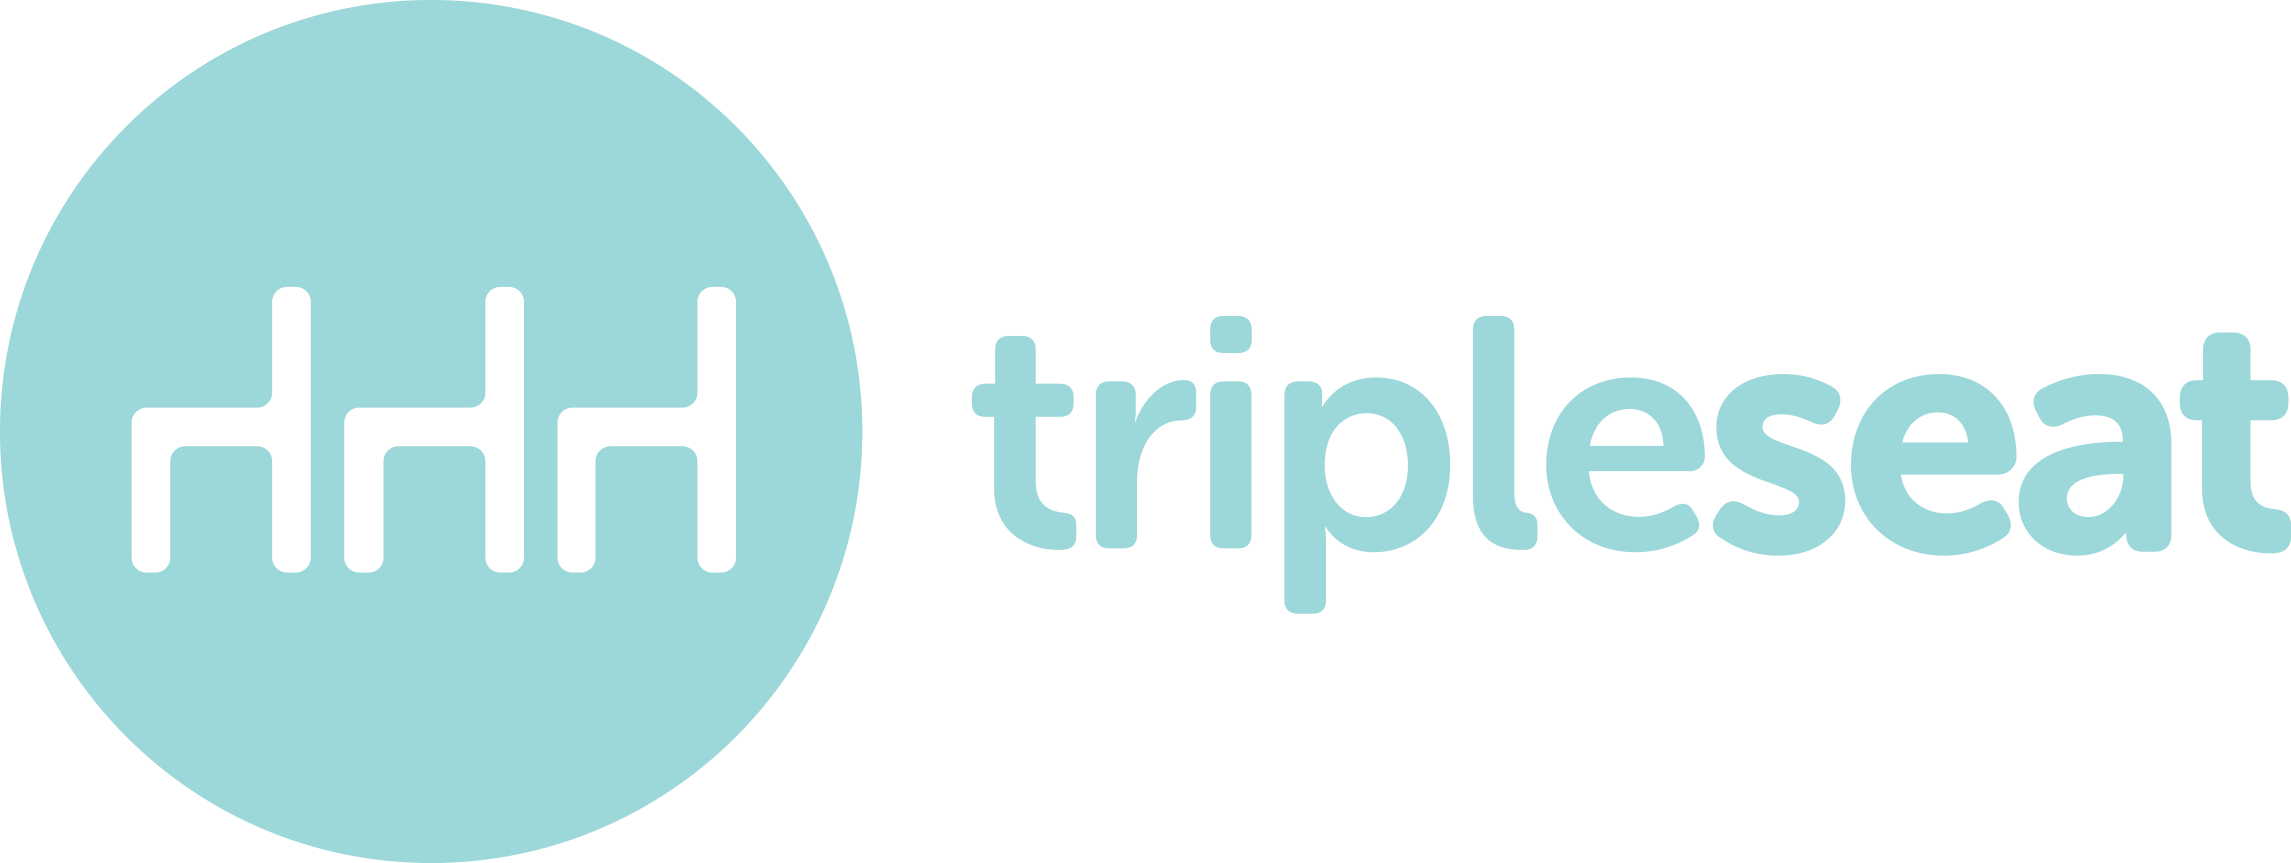 Tripleseat Company Logo